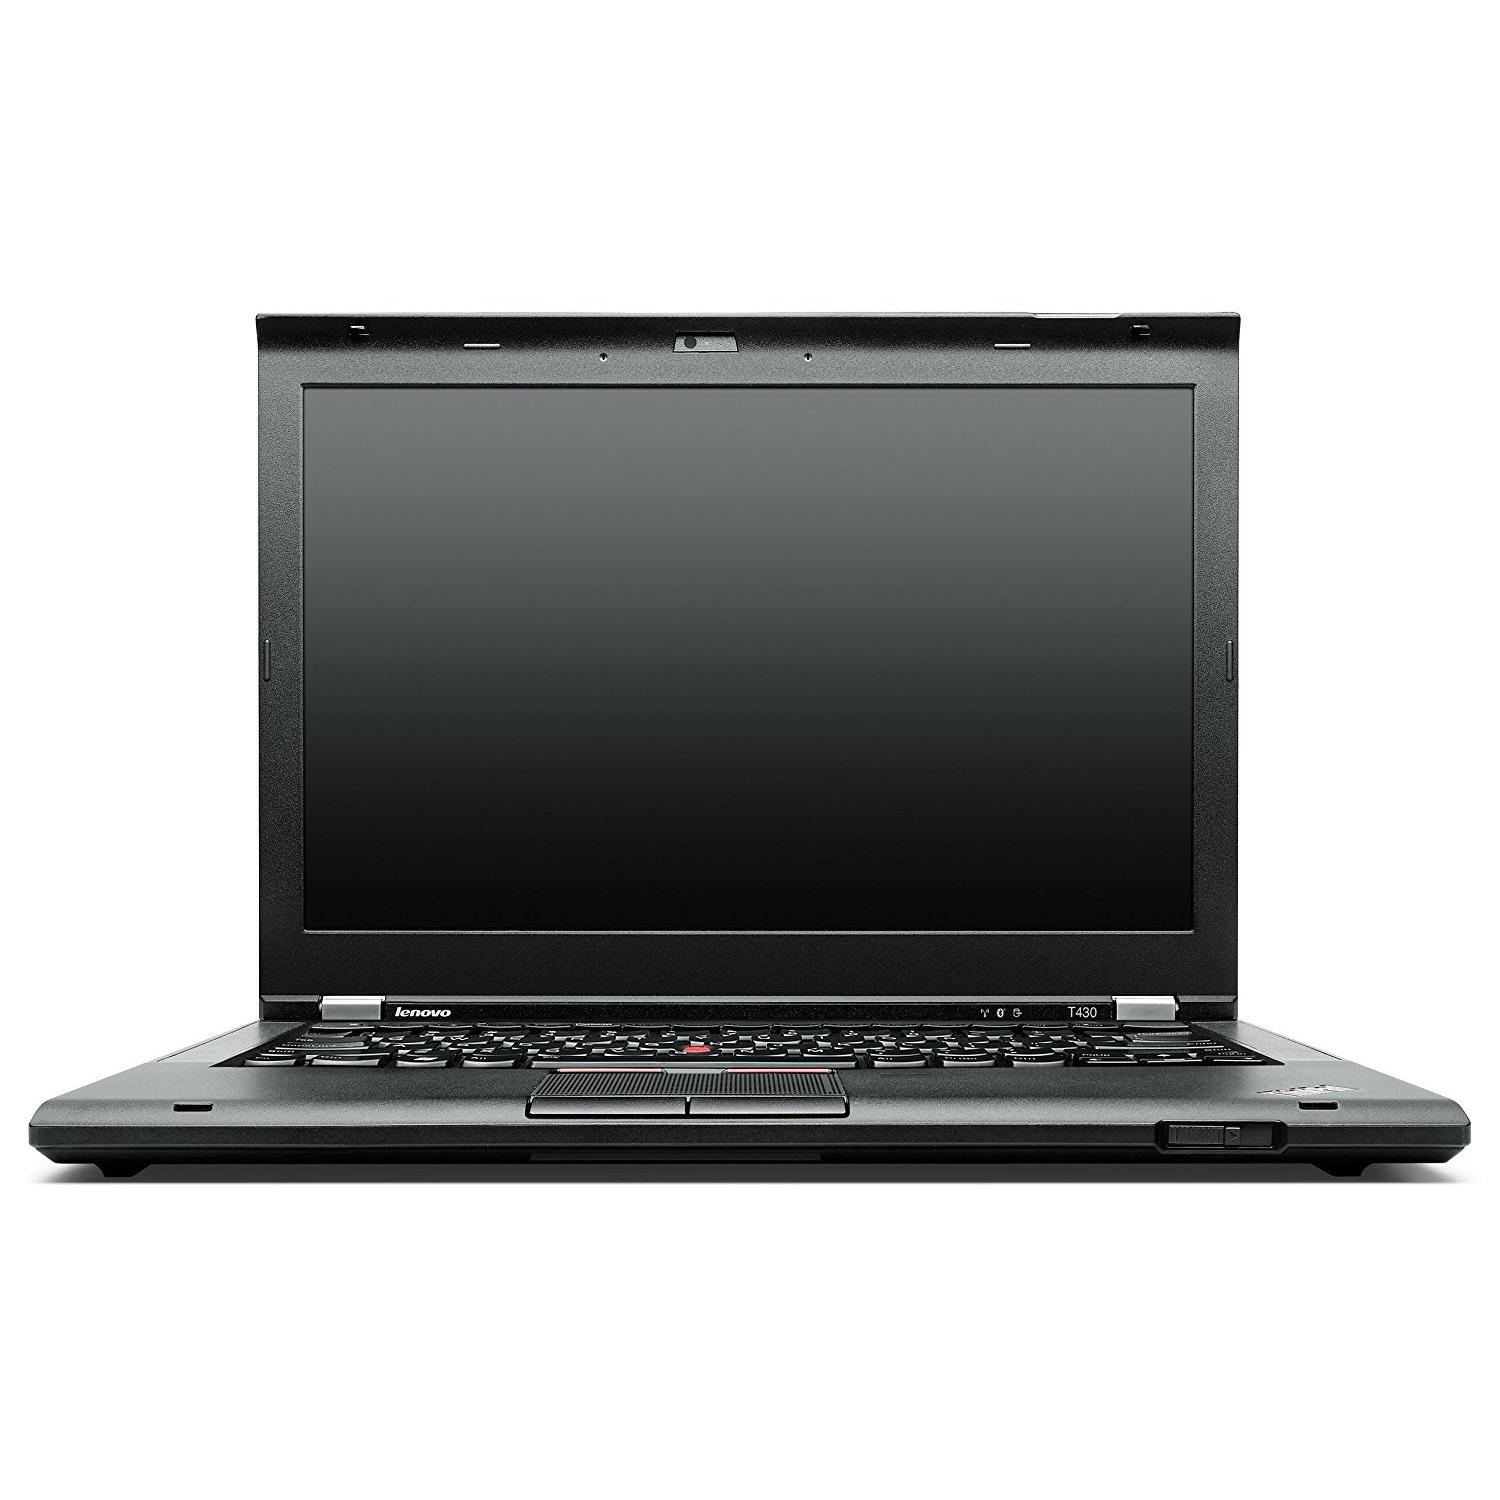 LENOVO ThinkPad T430 — i5-3320M, 4GB RAM, 500GB HDD (Refurbished)